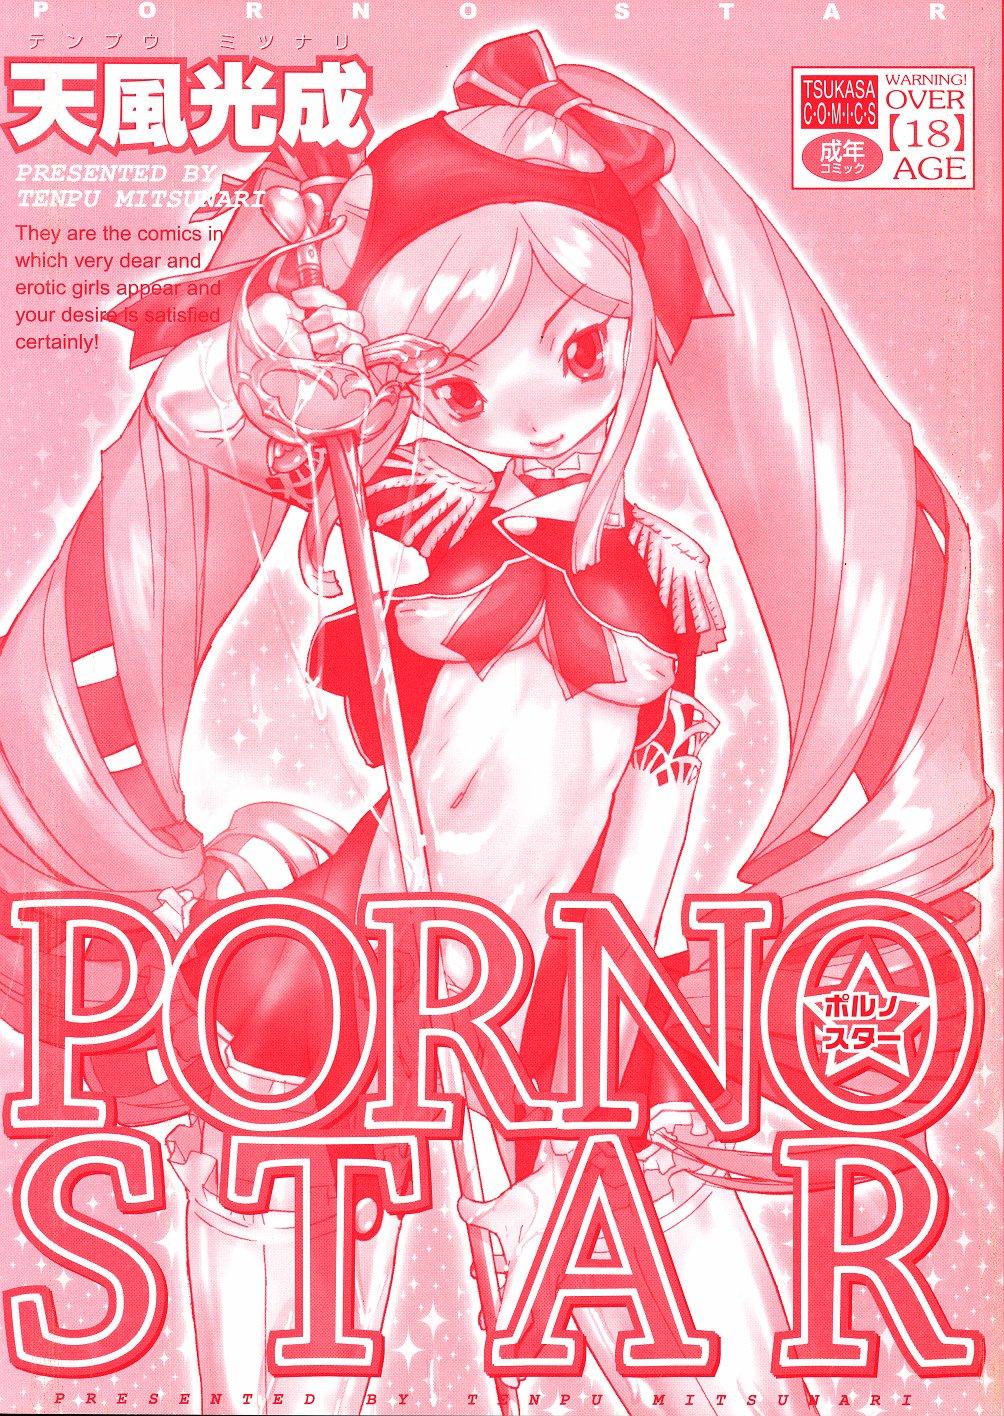 Hot Naked Girl PORNO STAR Gostoso - Picture 3